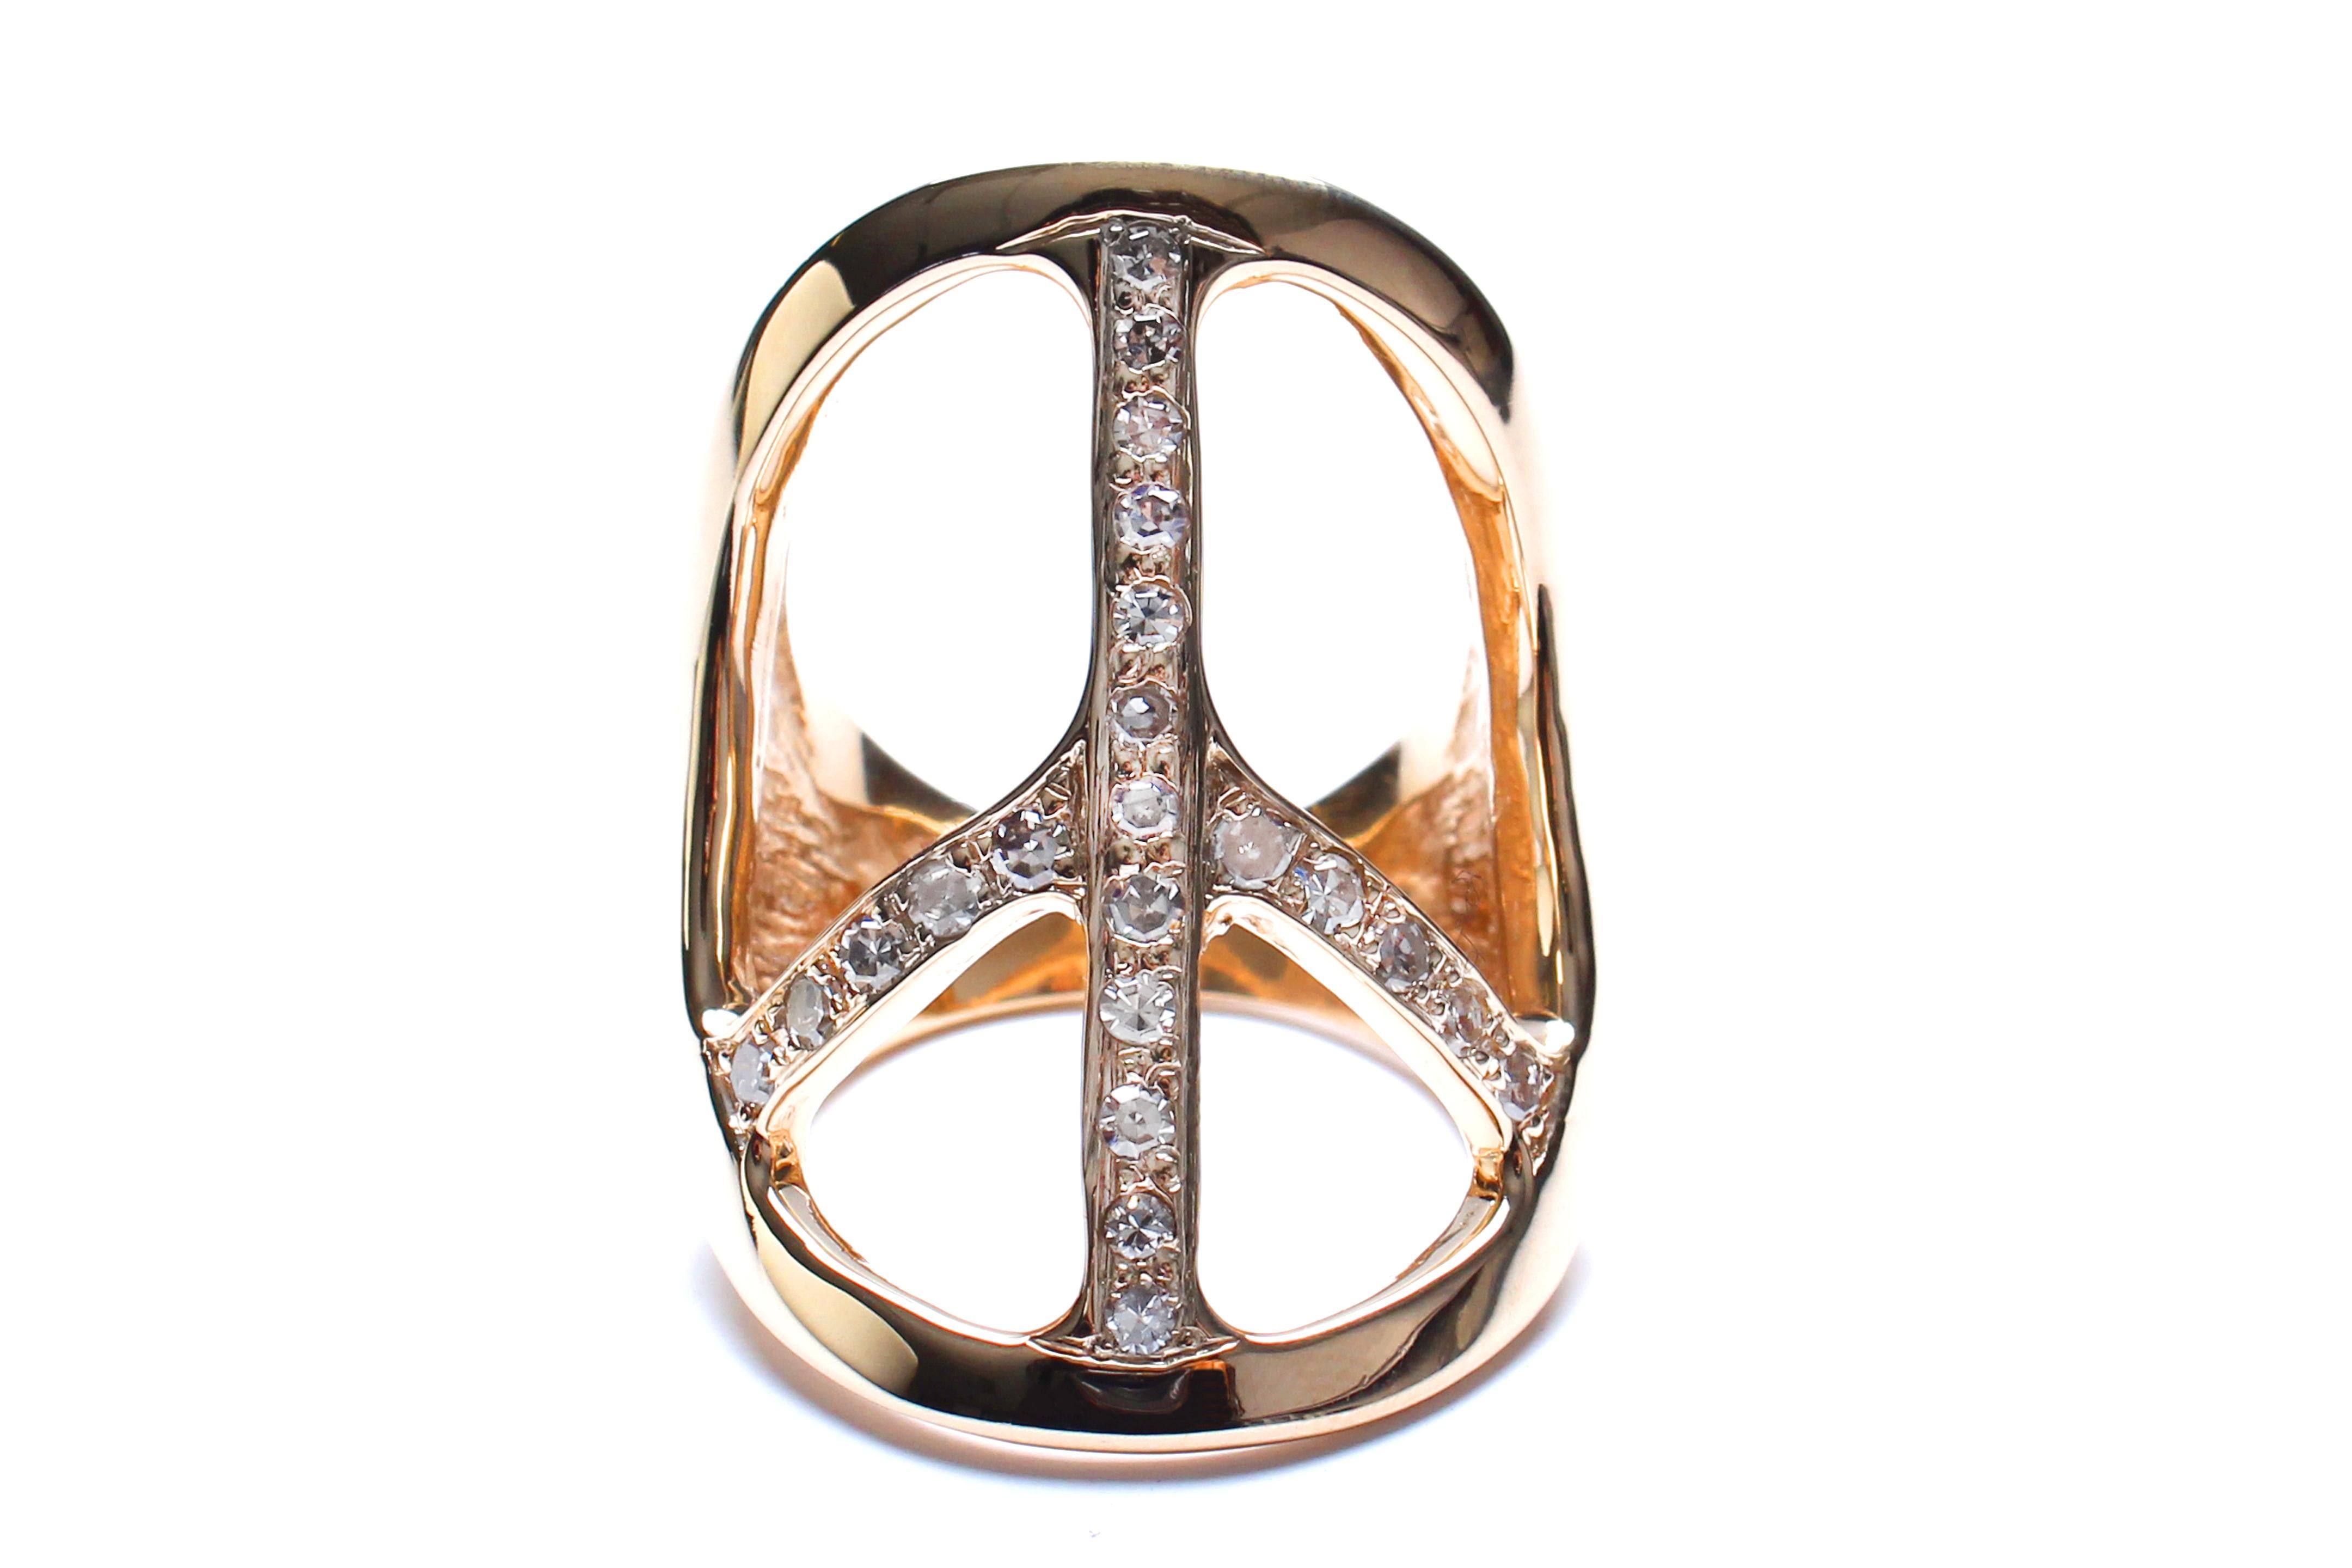 Clarissa Bronfman Signature Solid 14 Karat Gold Diamond Peace Ring For Sale 7